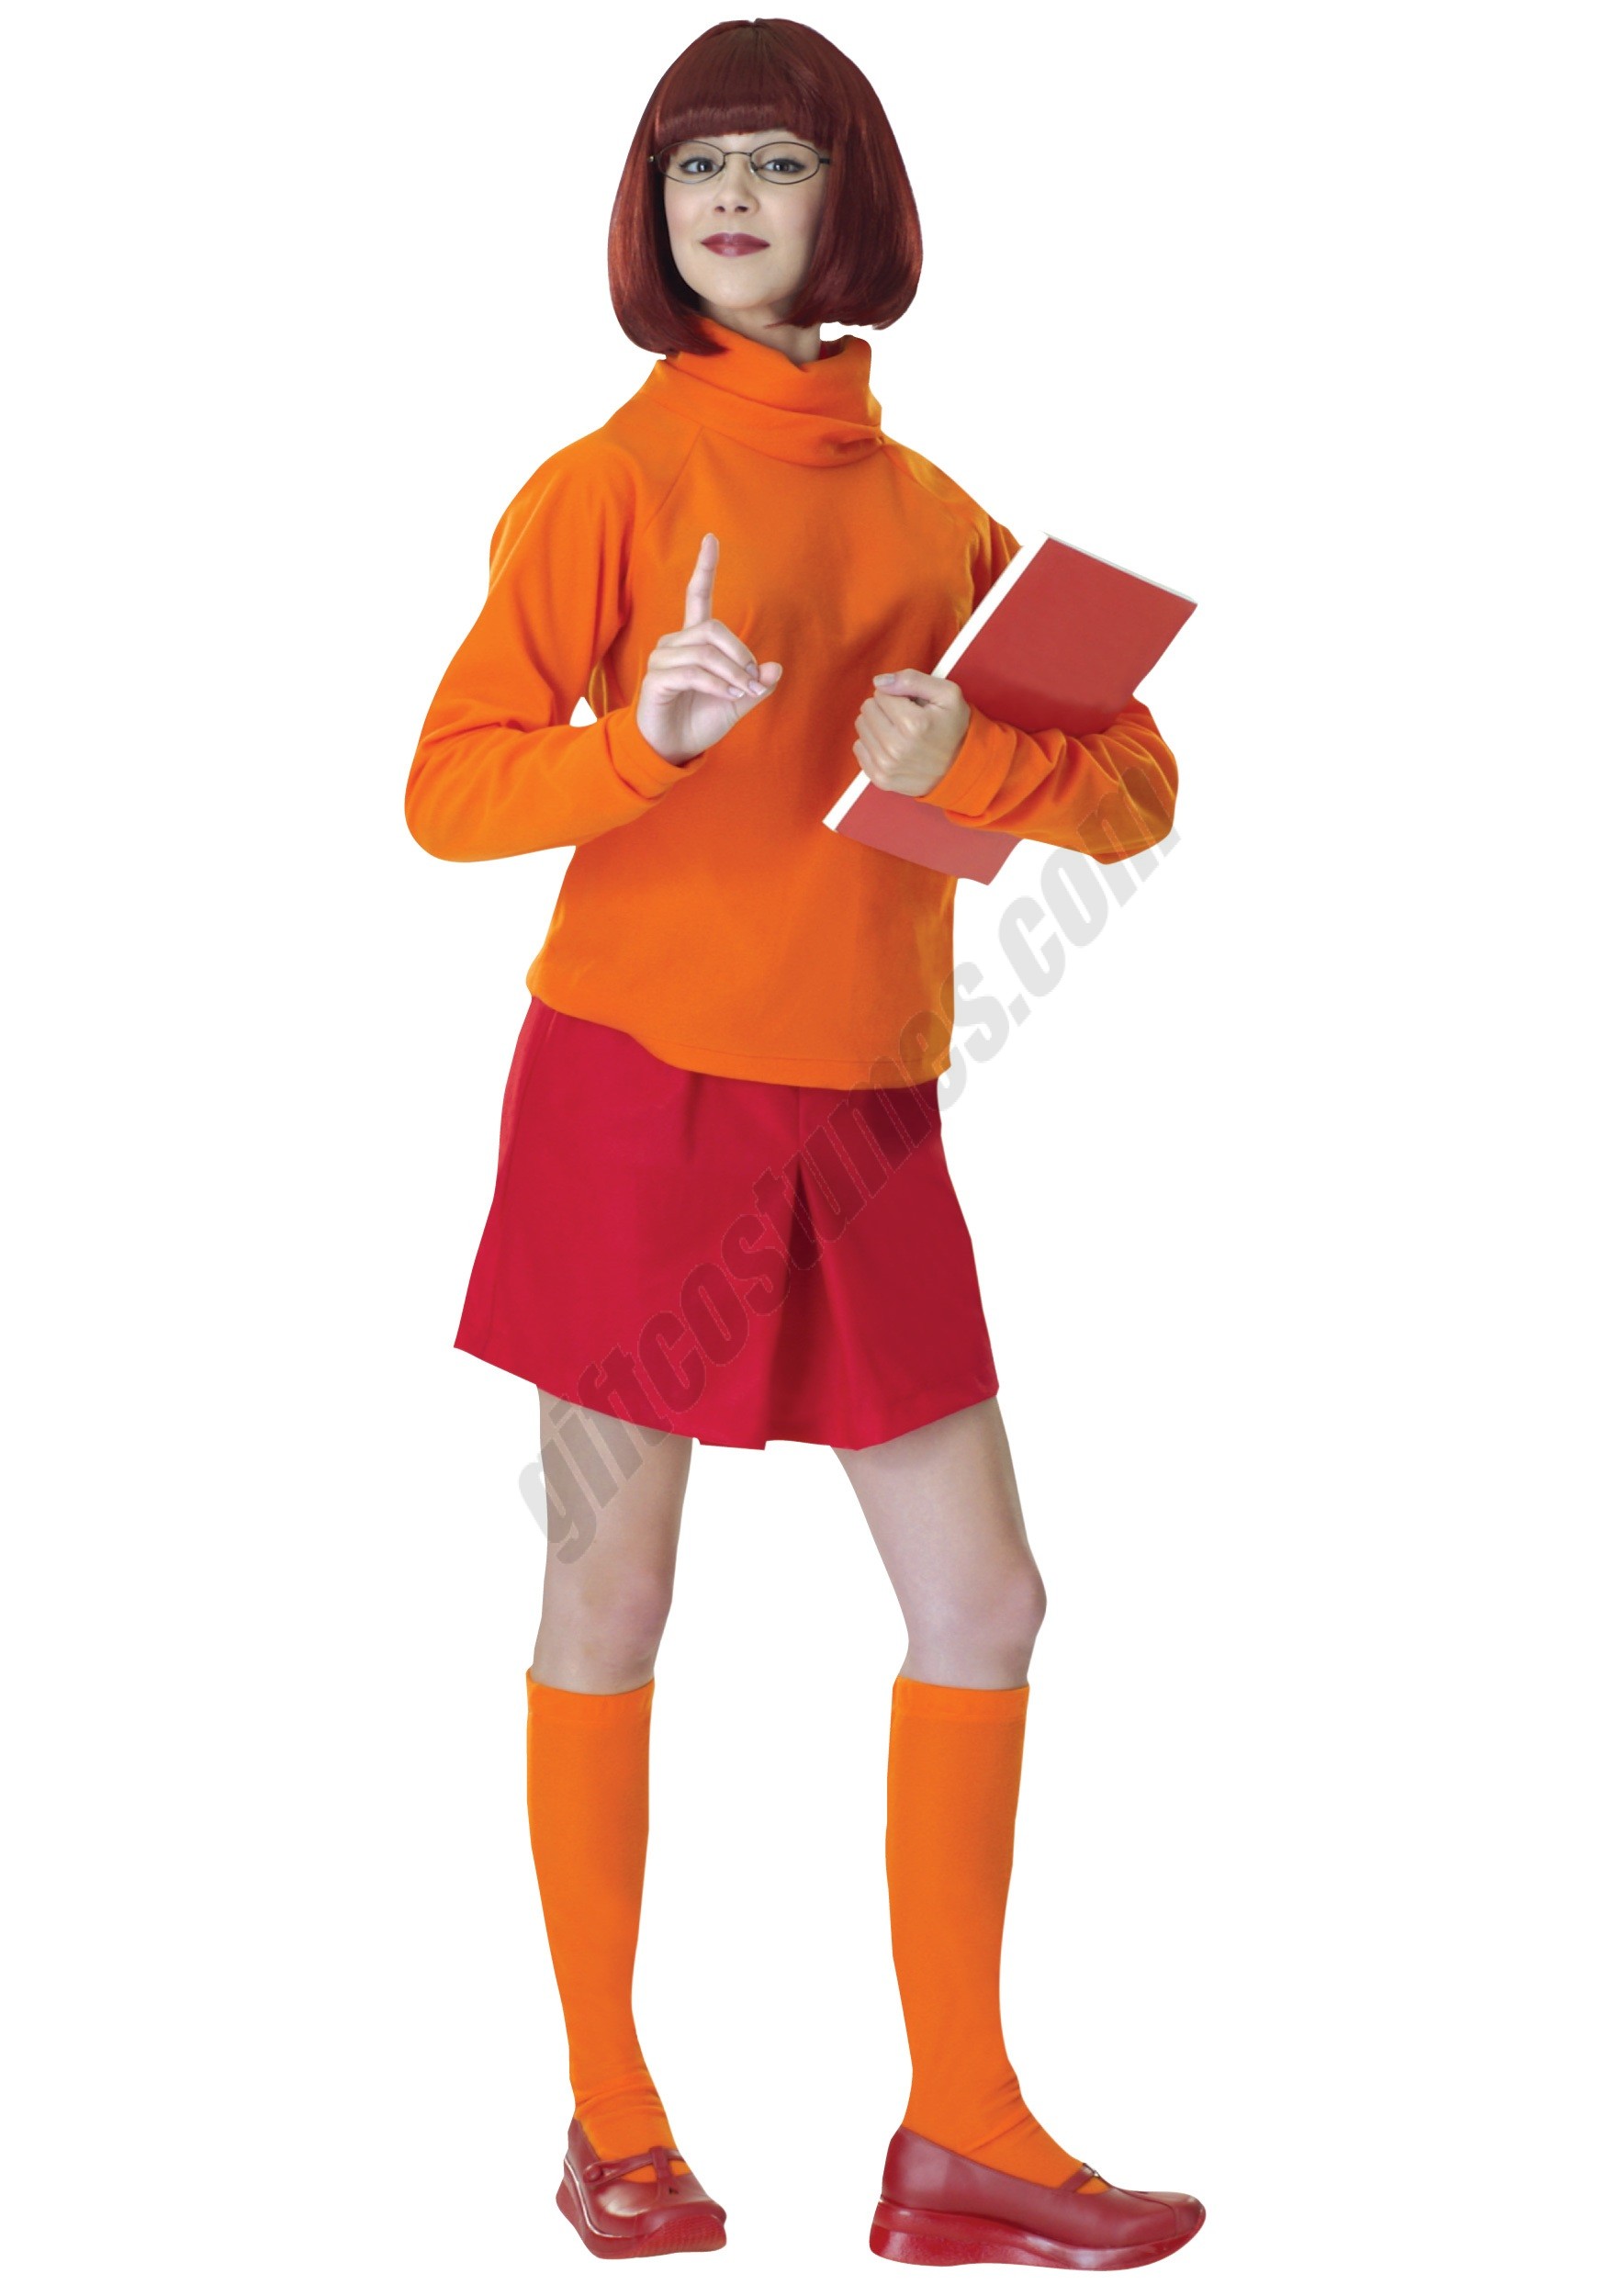 Adult Velma Costume - Women's - Adult Velma Costume - Women's